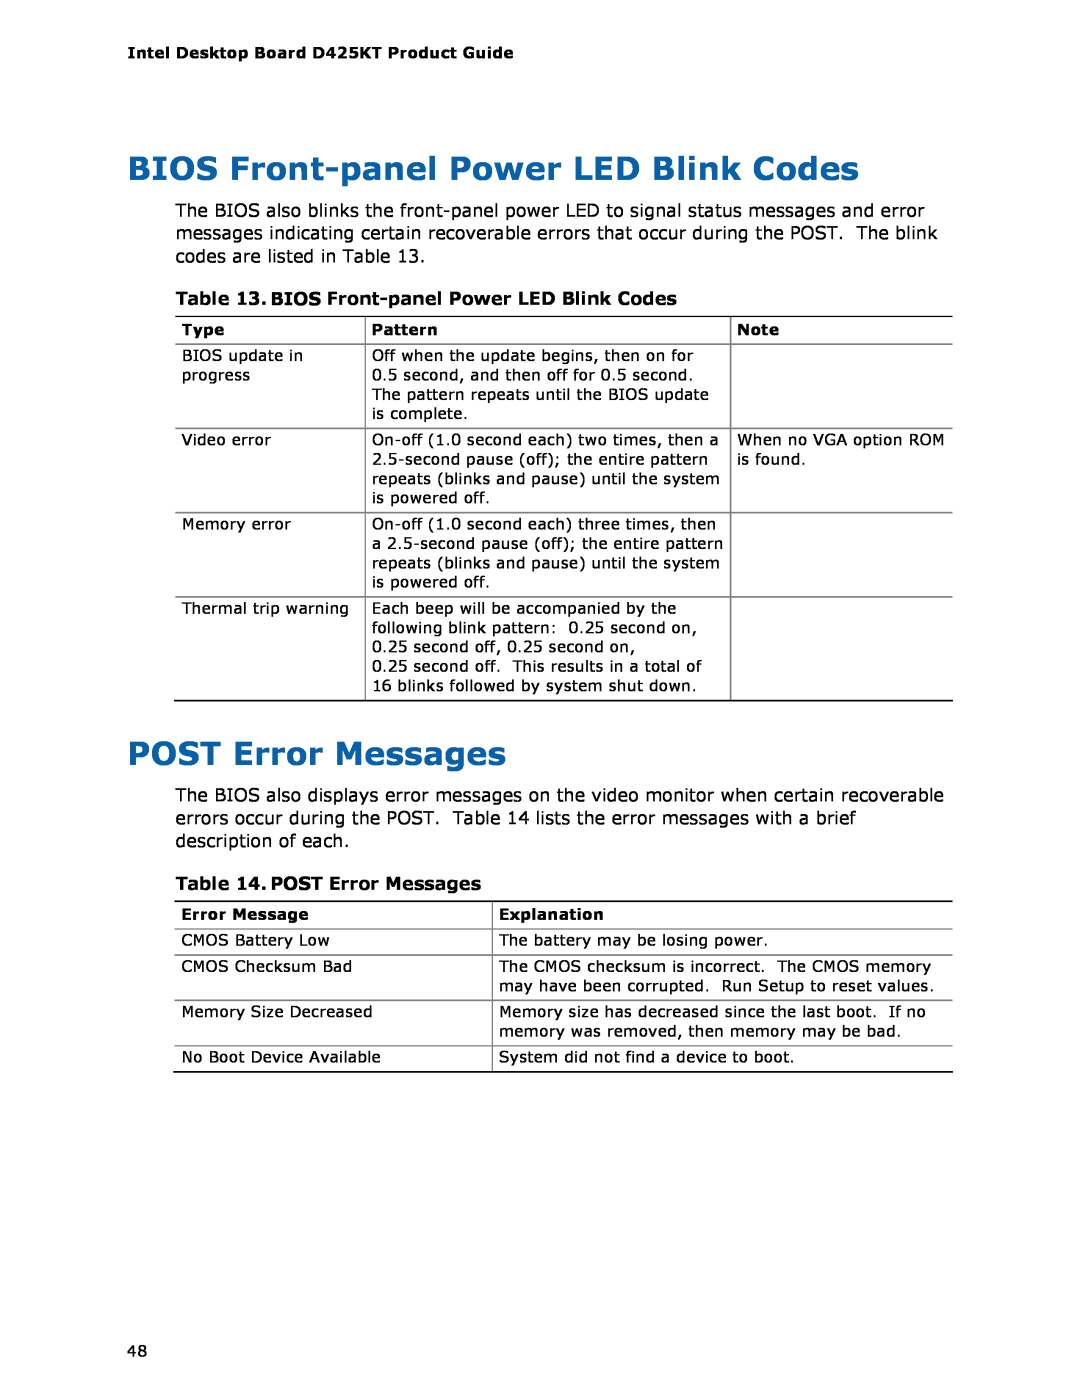 Intel D425KT manual BIOS Front-panel Power LED Blink Codes, POST Error Messages 